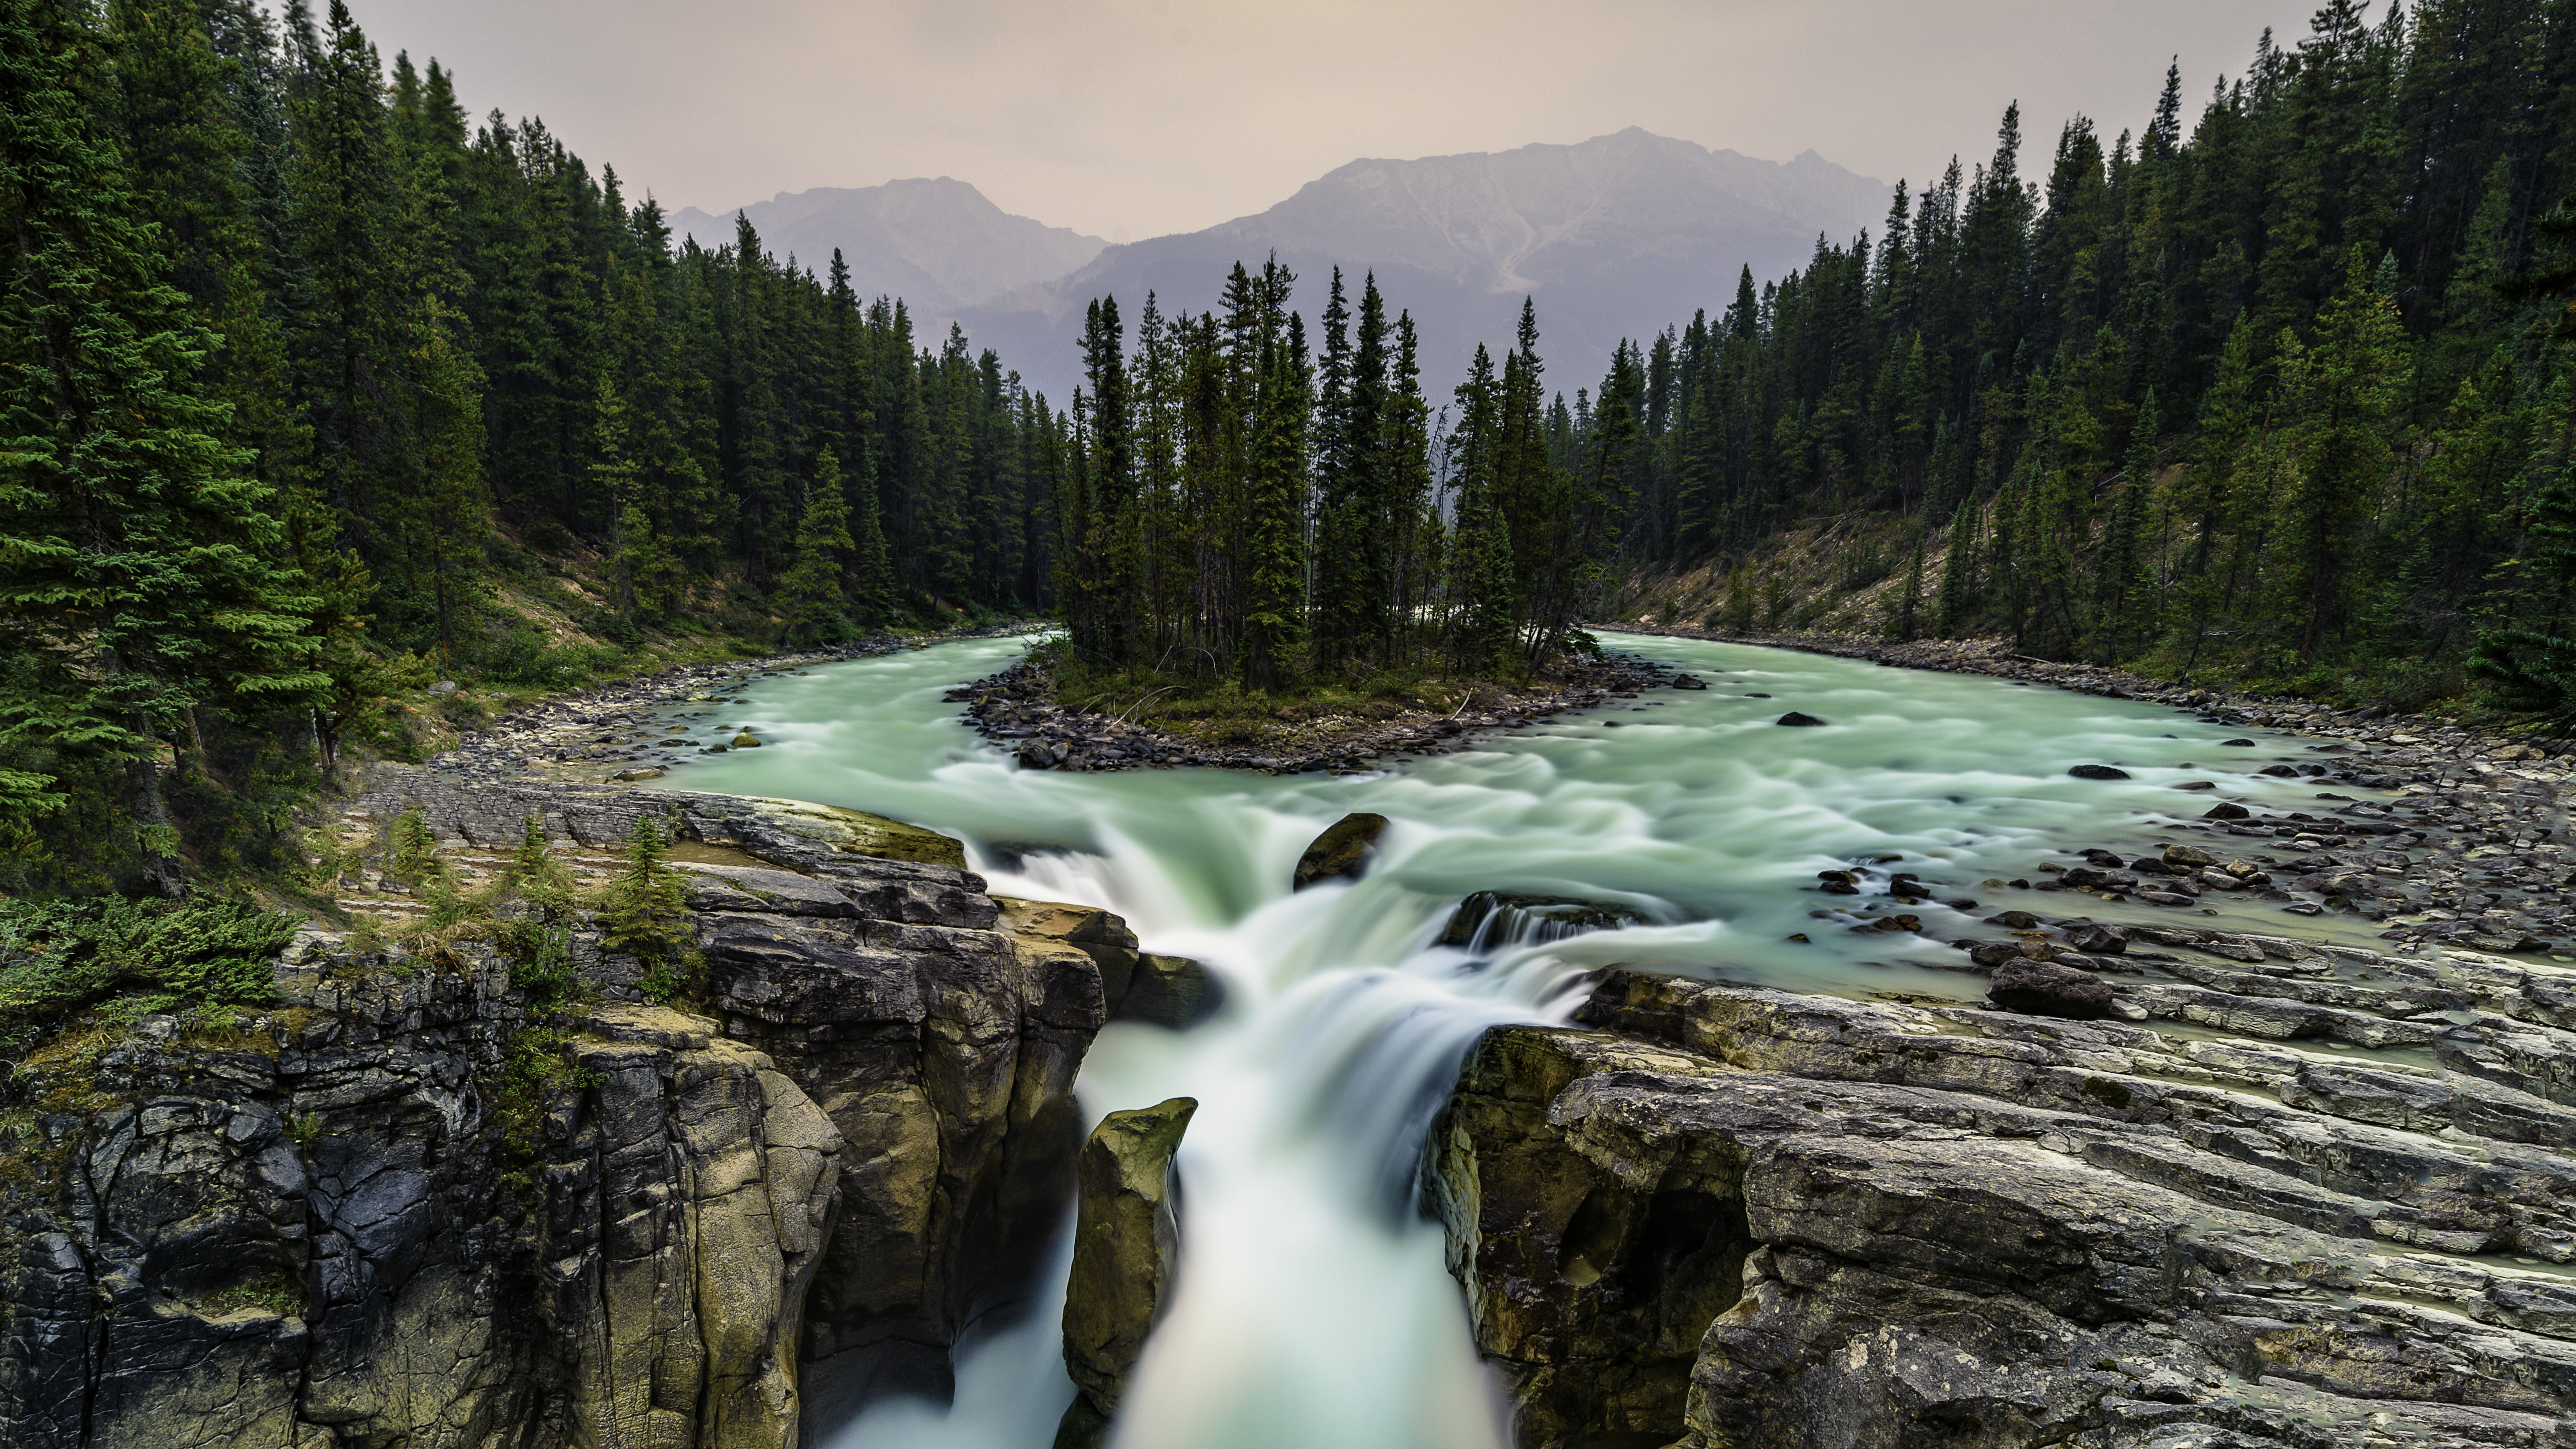 Canada Jasper National Park Alberta Falls On Sunwapta River Landscape Nature Hd Wallpapers For Mobile Phones Tablet And Laptop 5108×2873